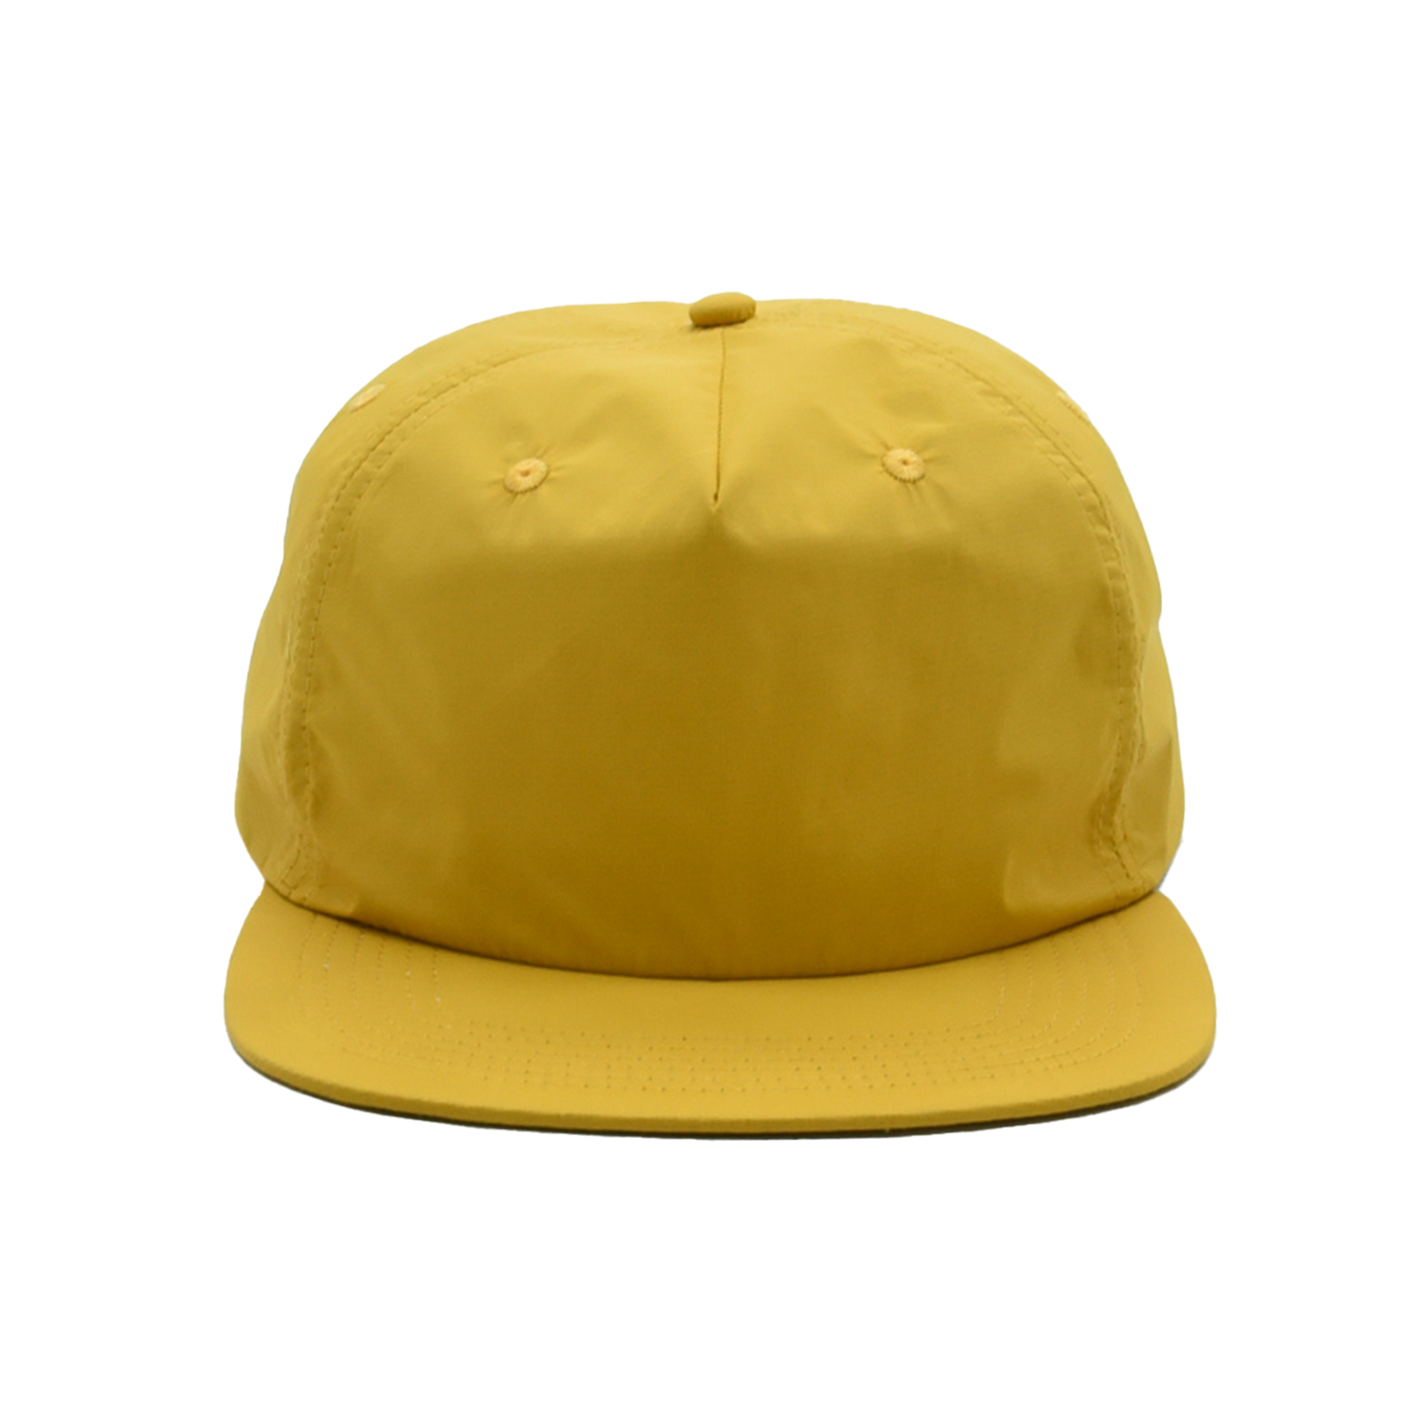 Golden 5 panel snapback hat